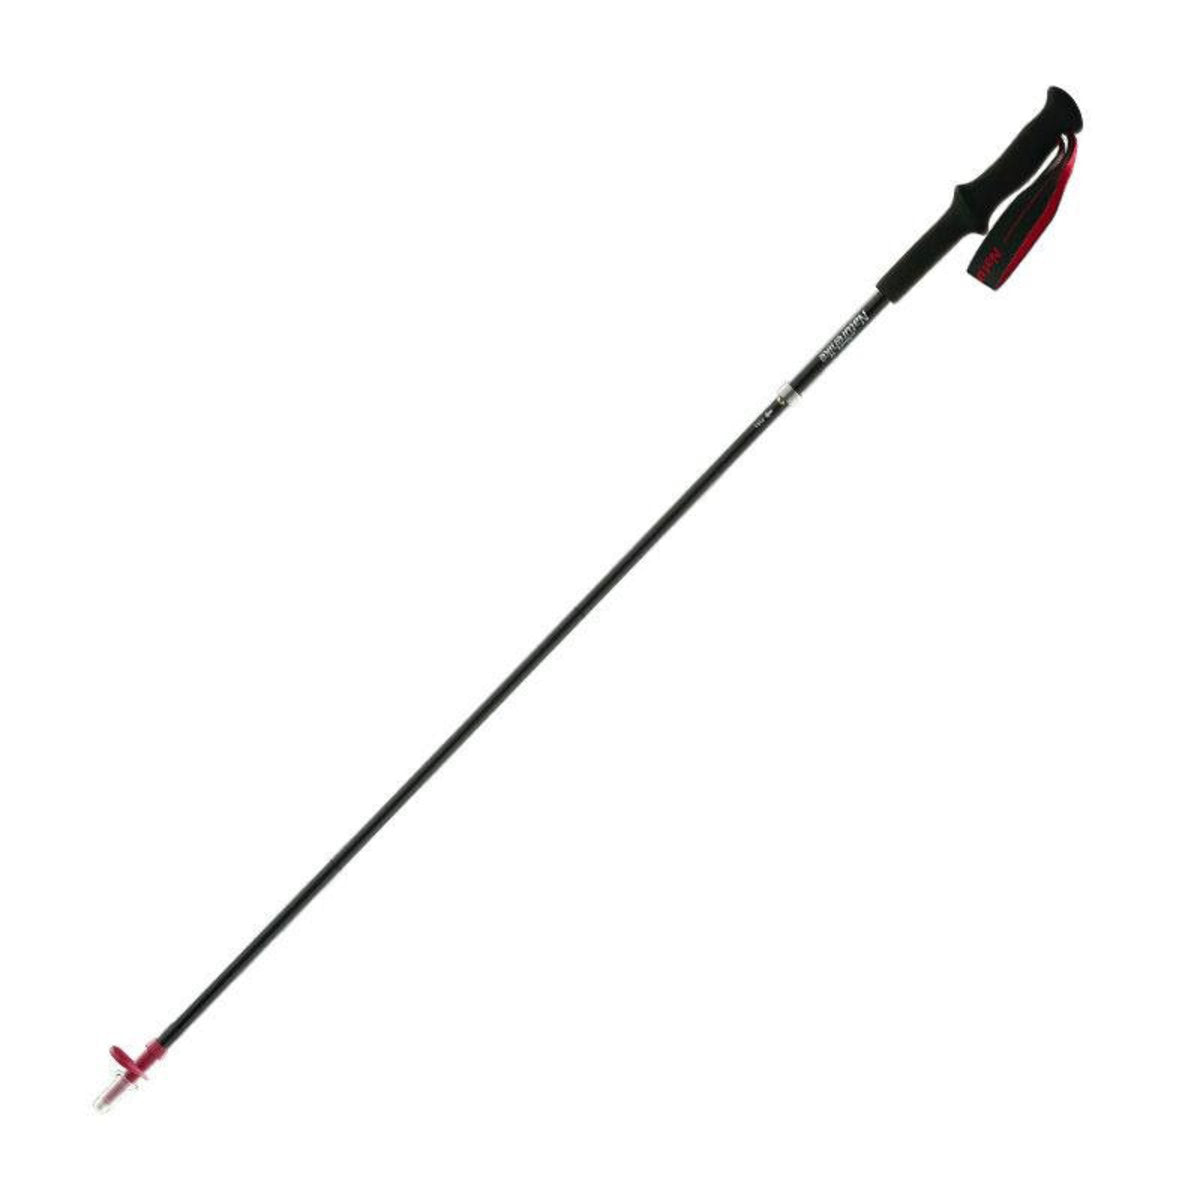 Naturehike - ST08 lightweight carbon fiber 4-section Z hiking pole (110cm) - Purple